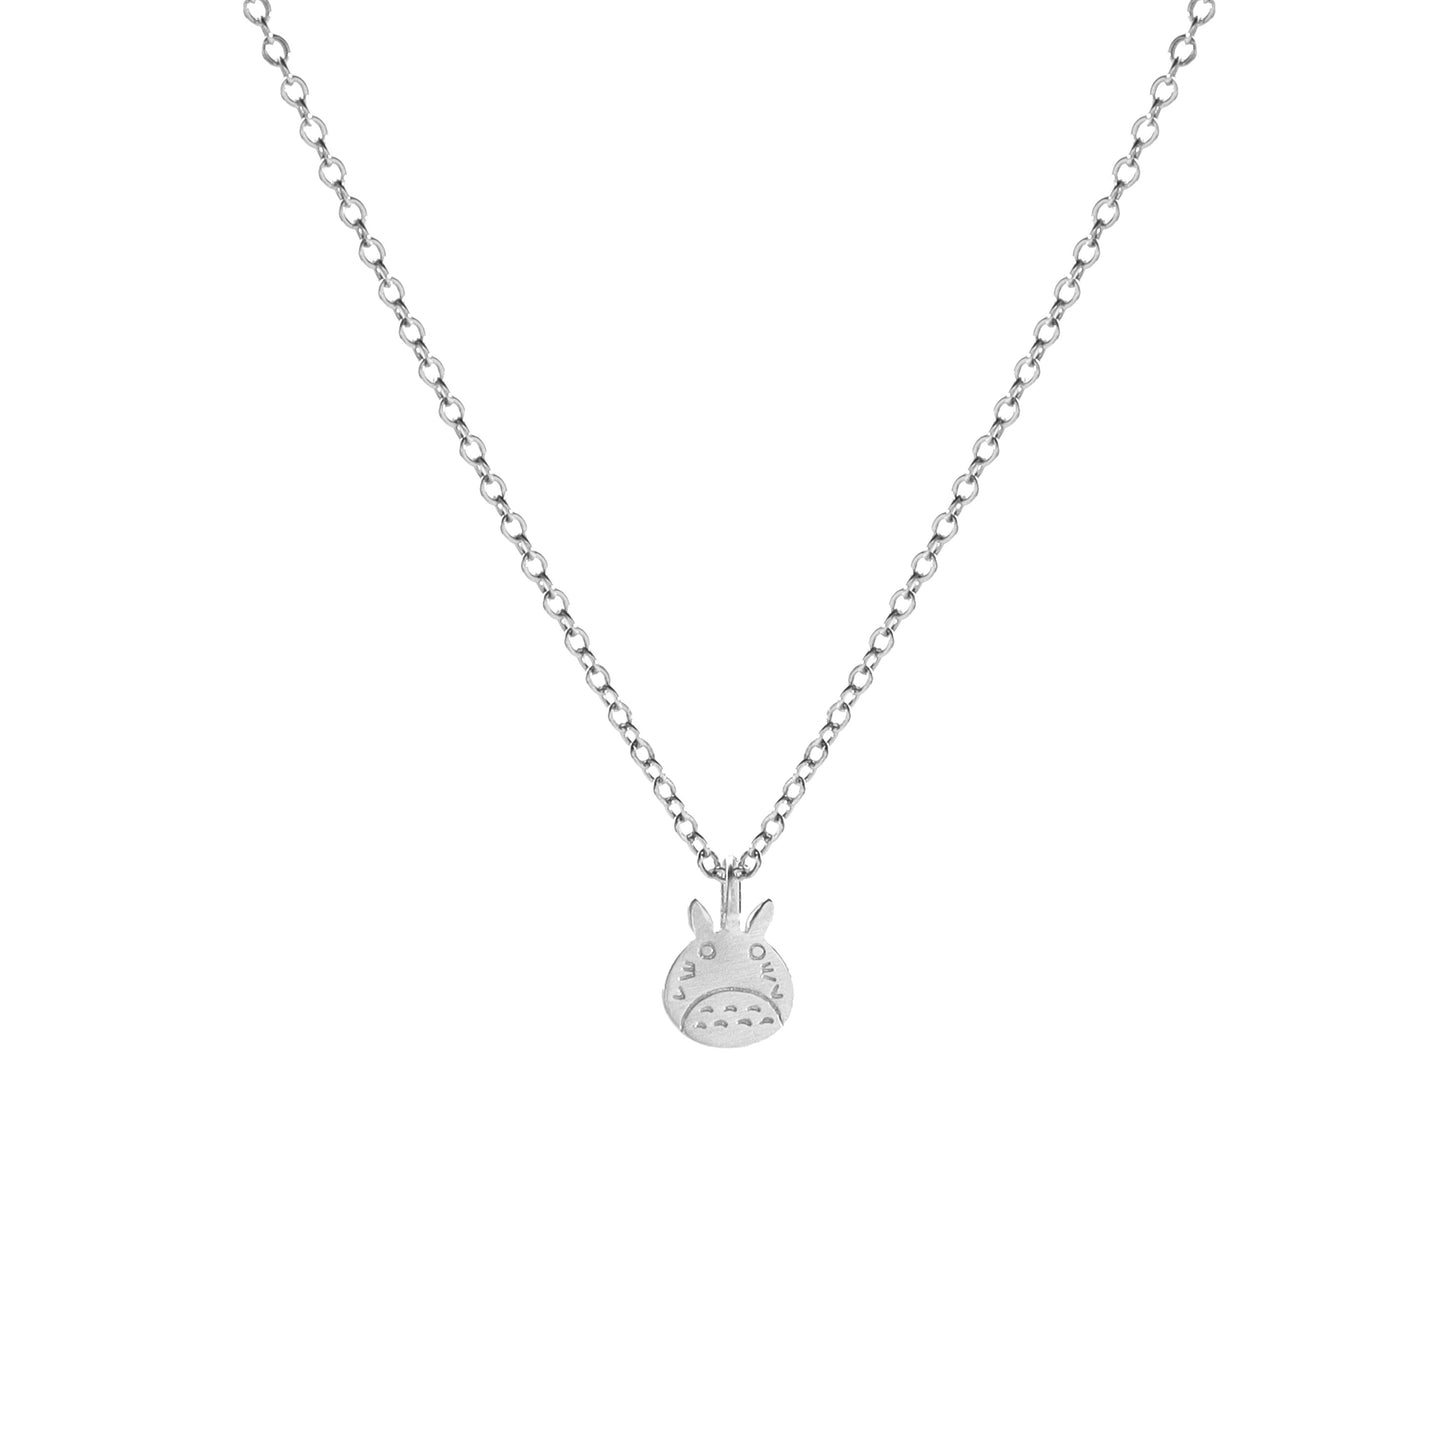 Totoro Silver 925 Necklace/Bracelet